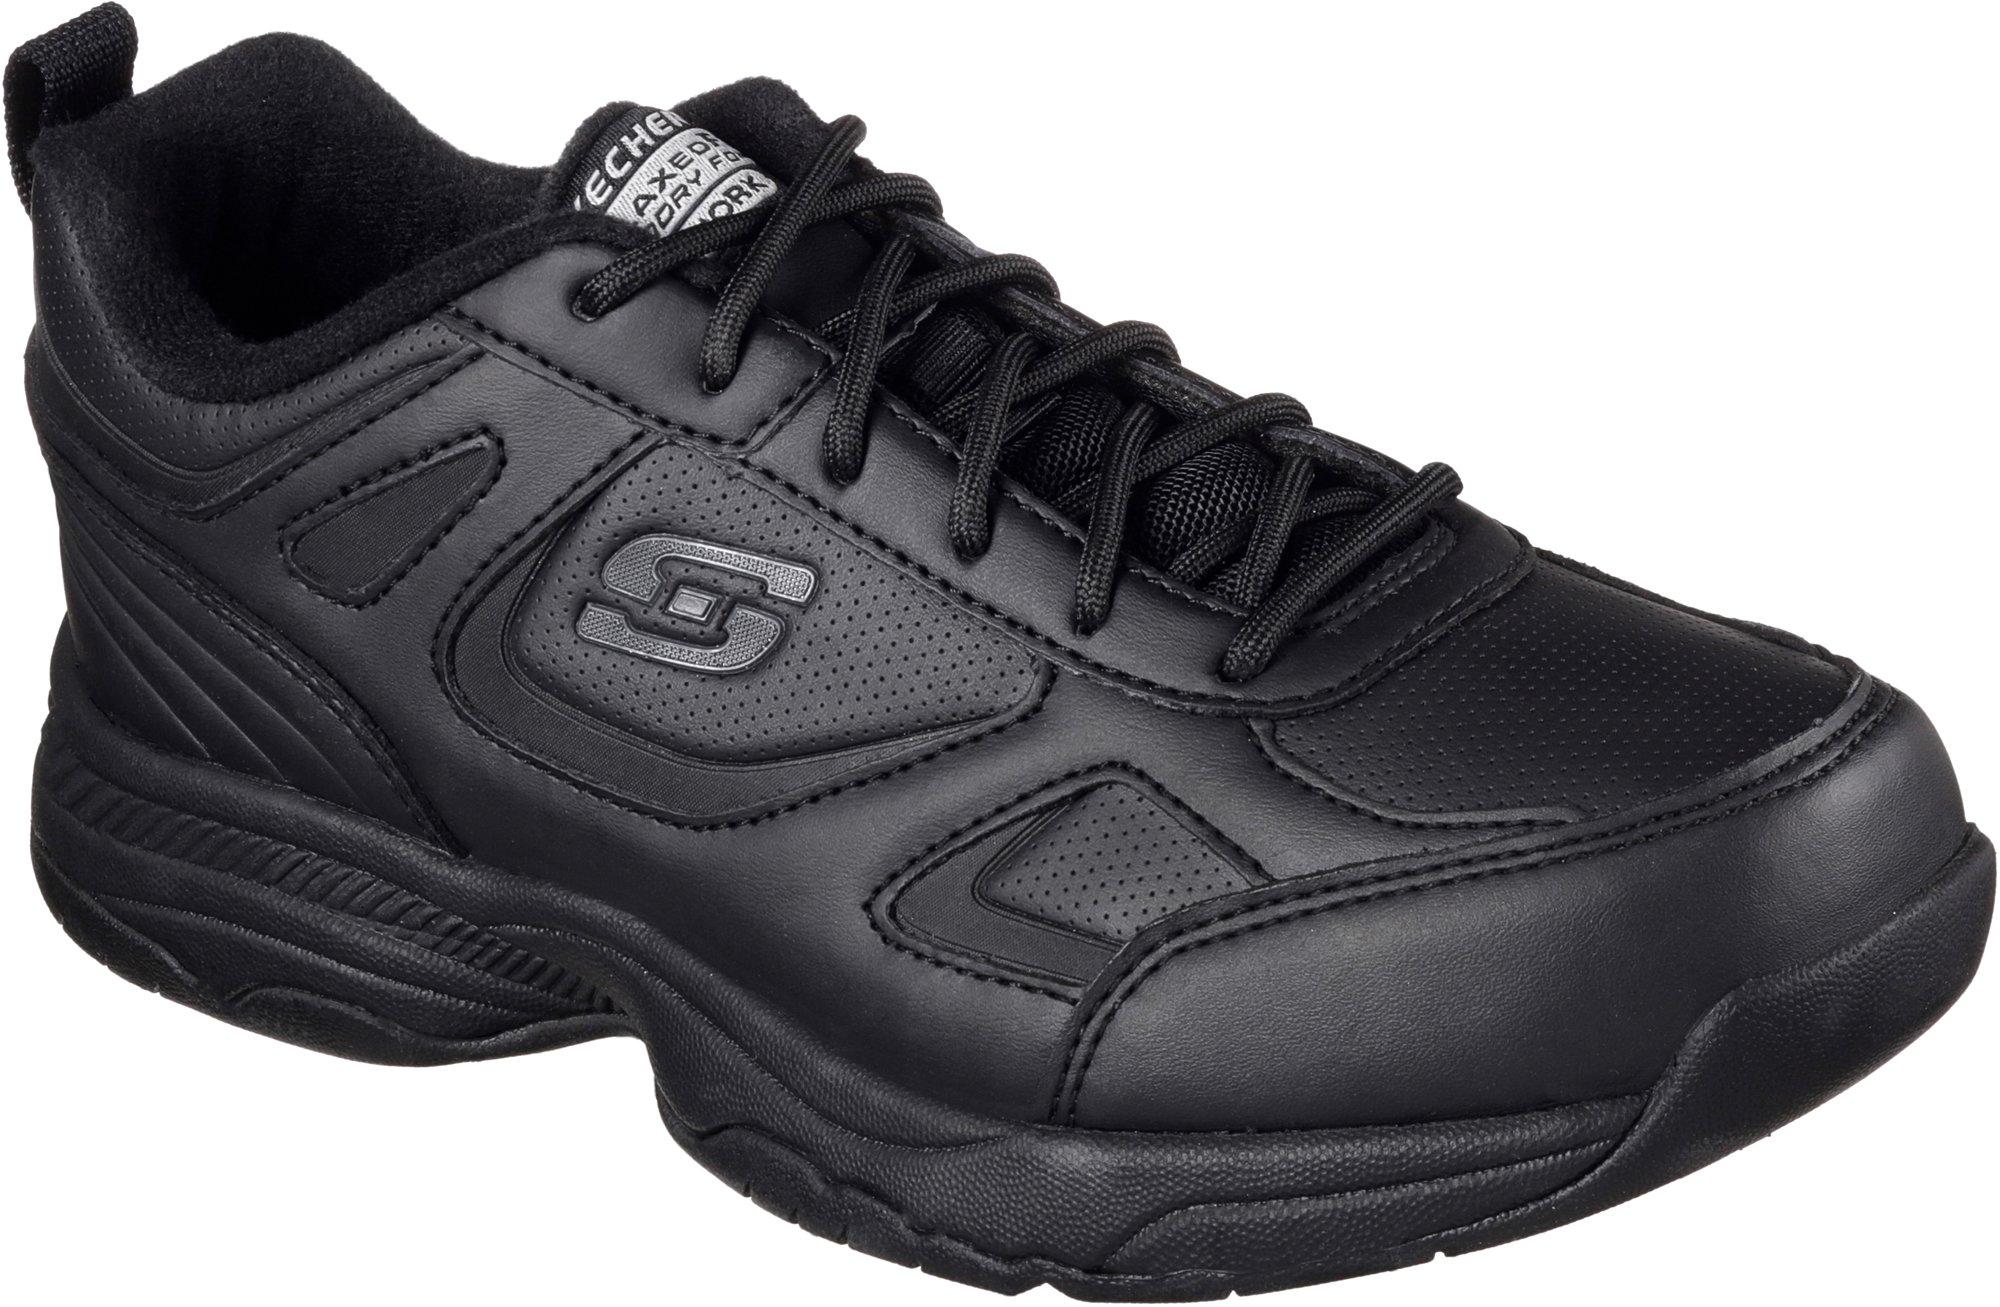 all black slip resistant shoes